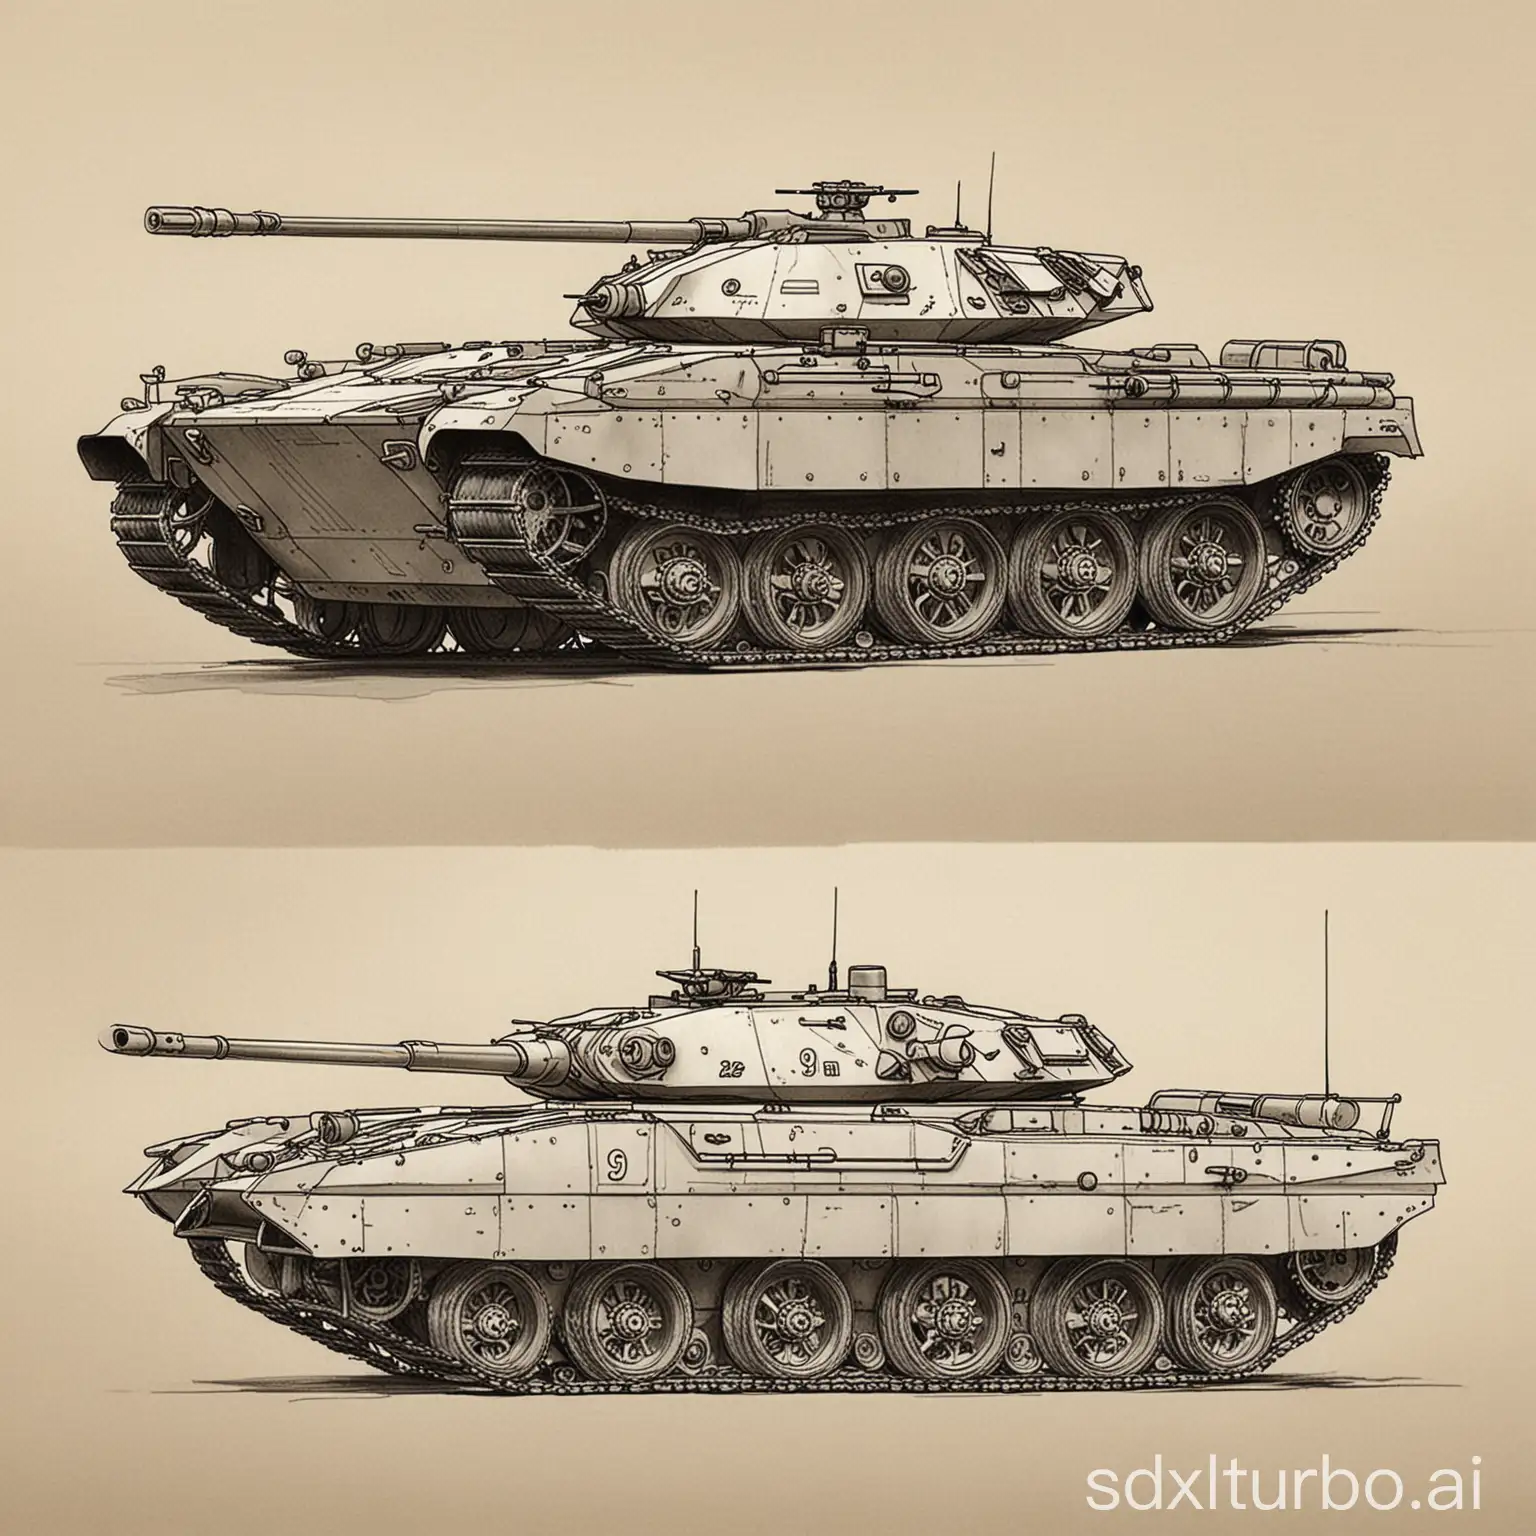 Sturdy-and-Majestic-Type-99-Tank-Sketch